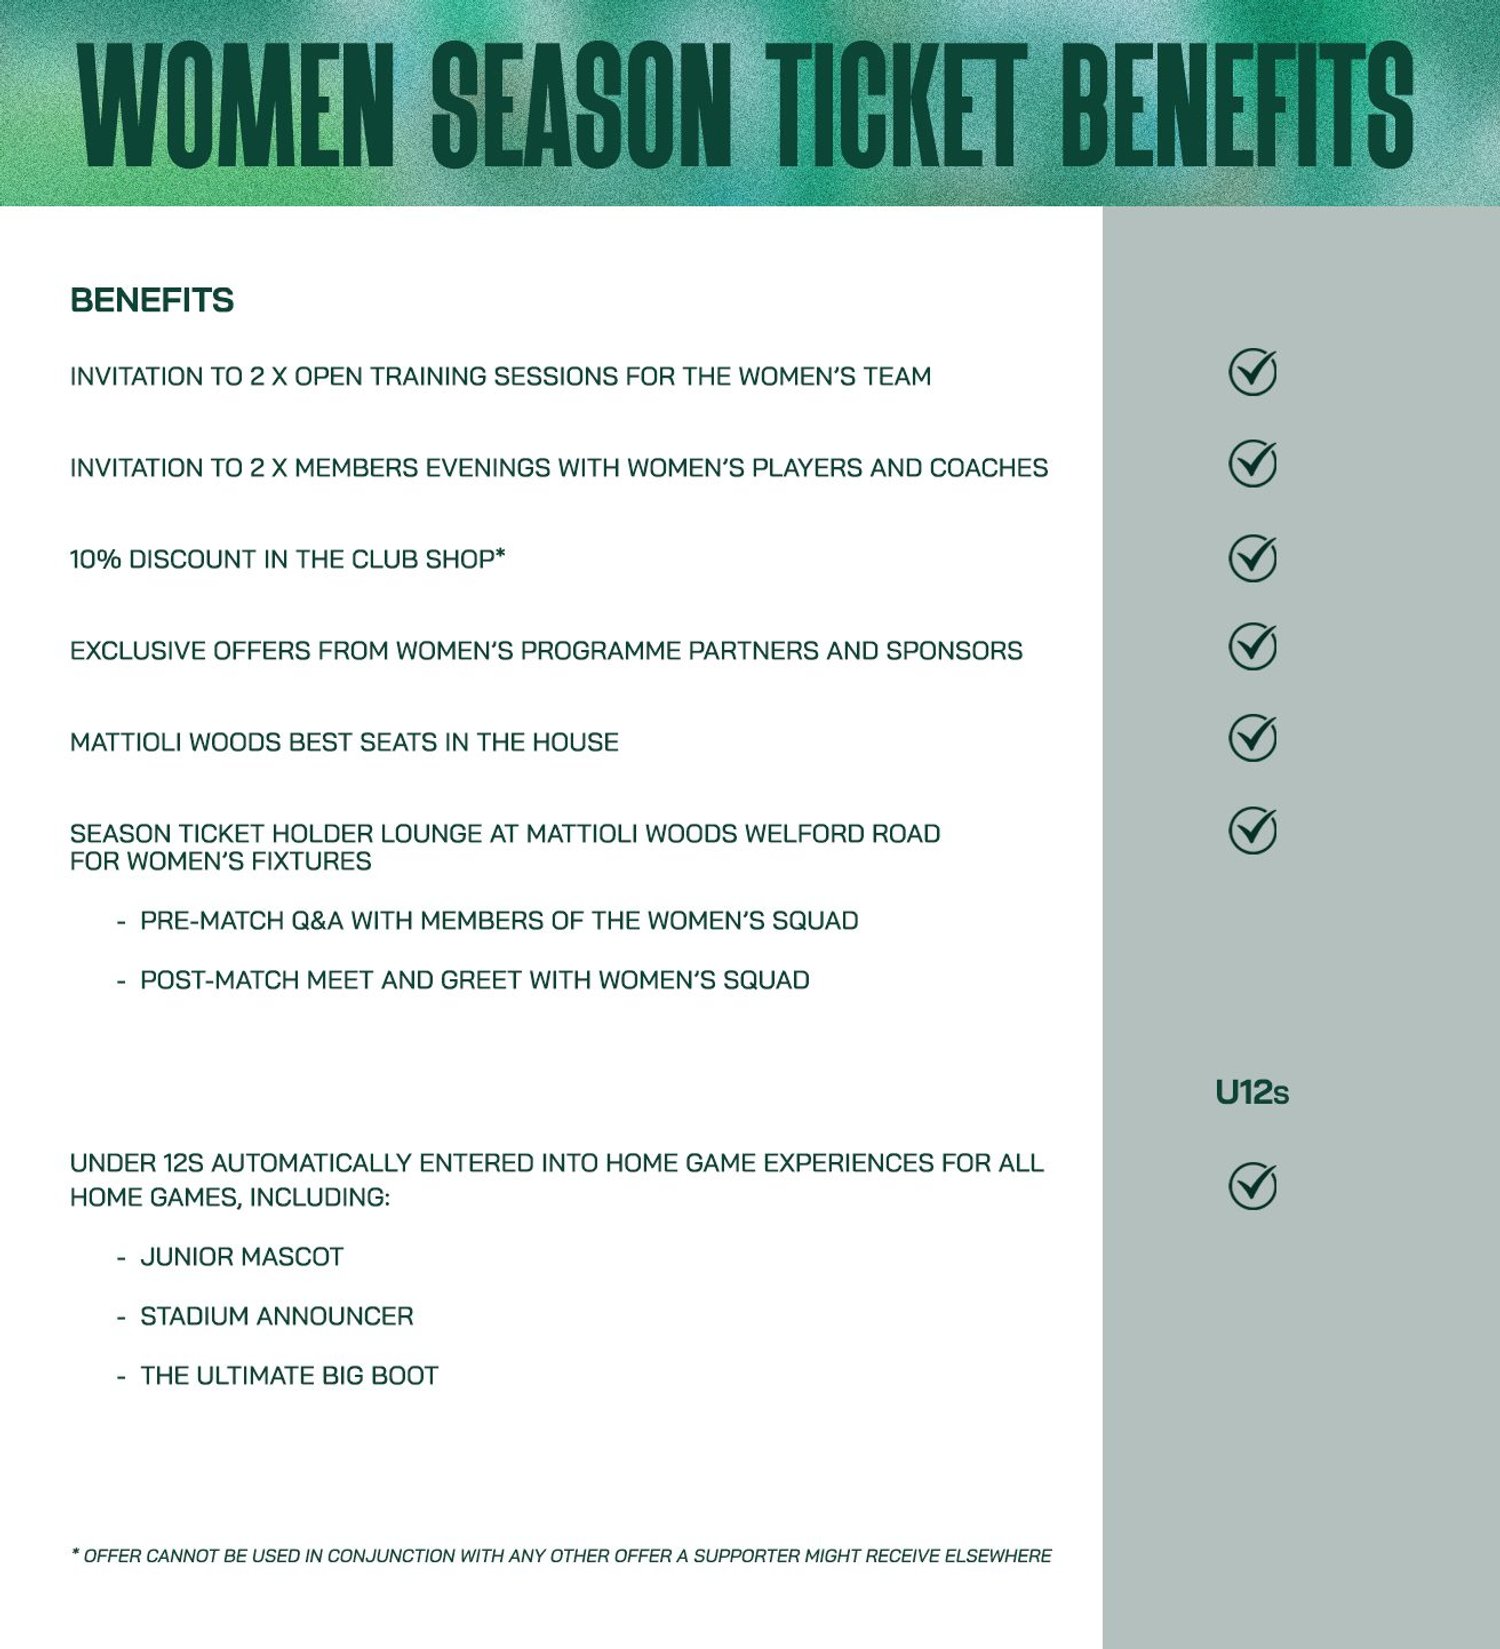 Season Ticket Benefits